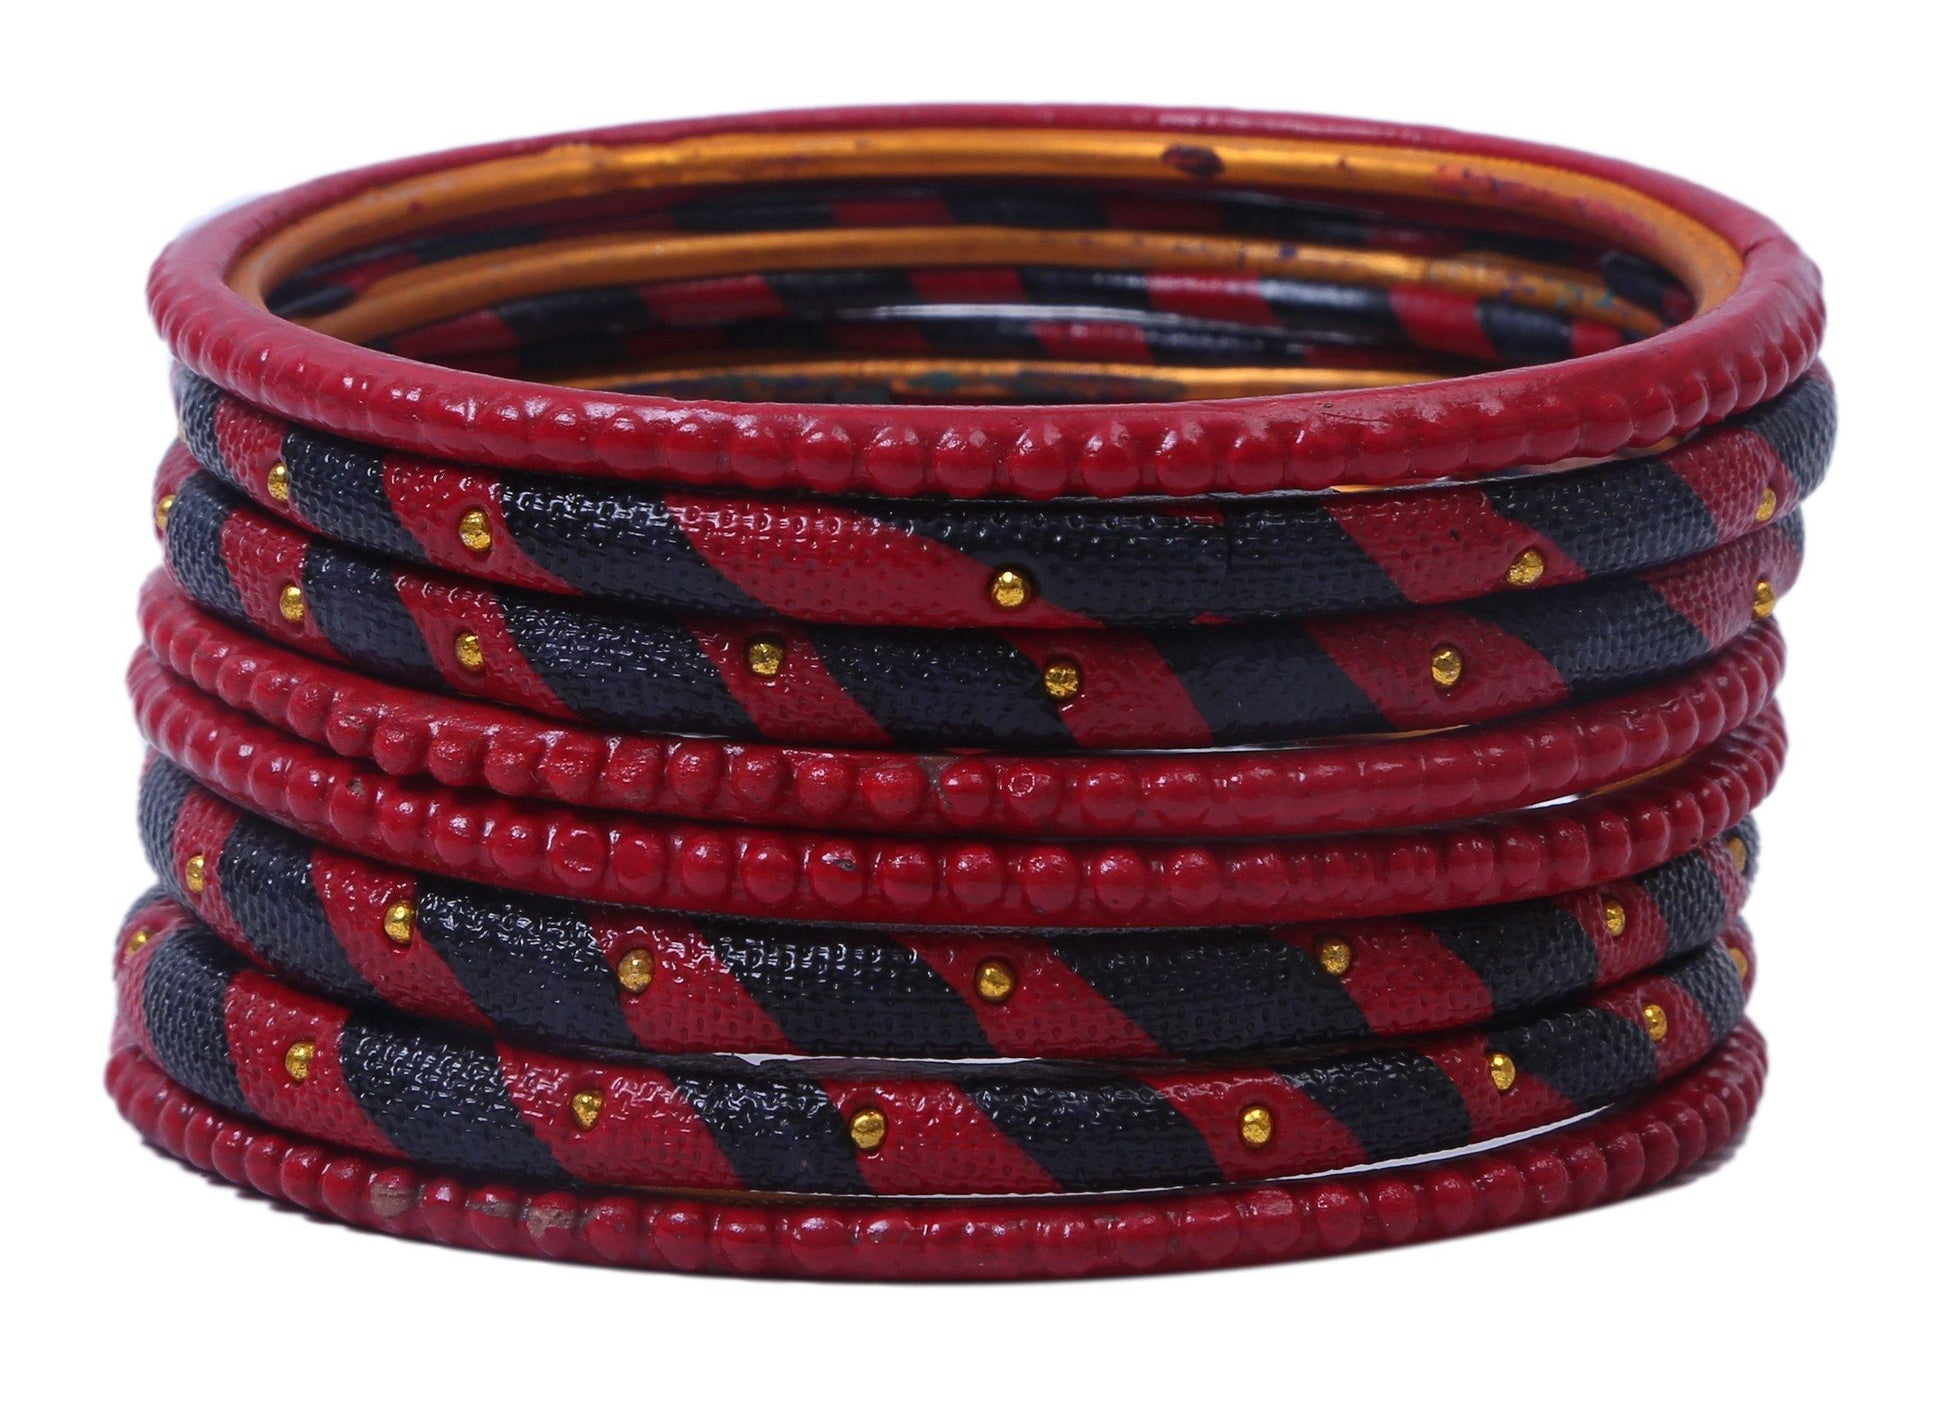 sukriti casual fashion red lac bangles for girls, women - set of 8